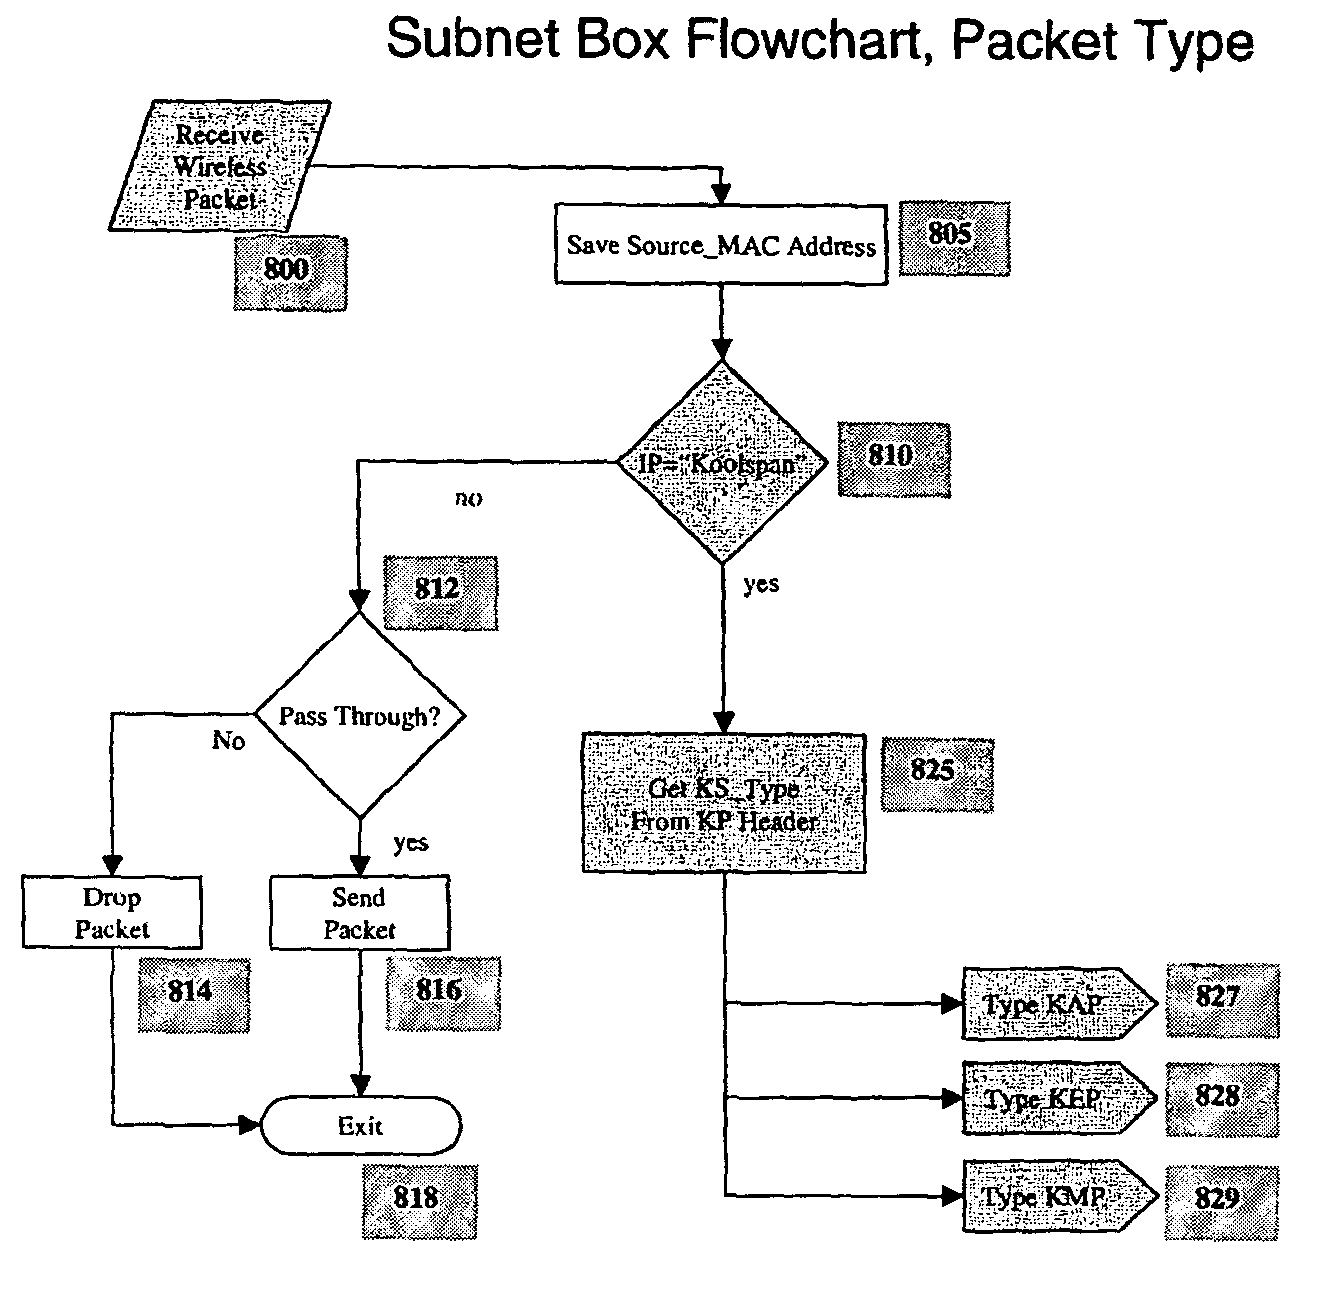 Subnet box